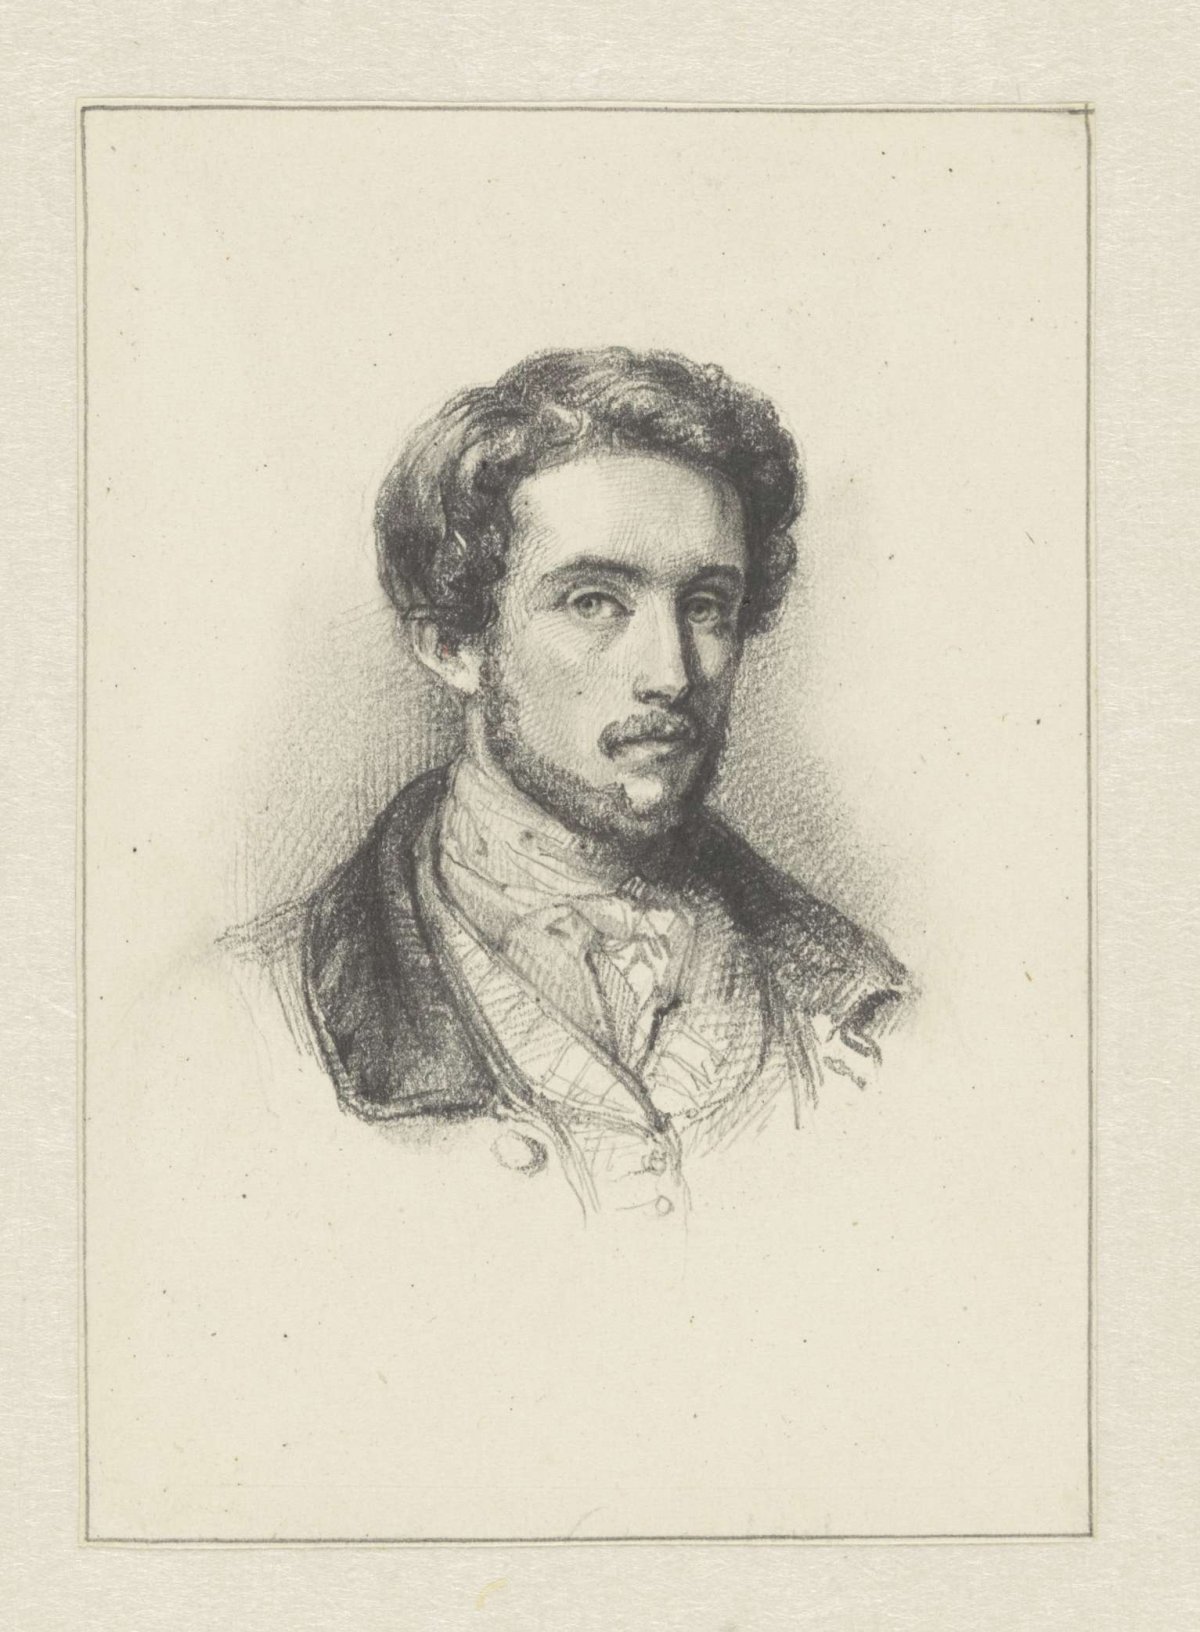 Self-portrait of Louis Moritz, Louis Moritz, 1783 - 1850